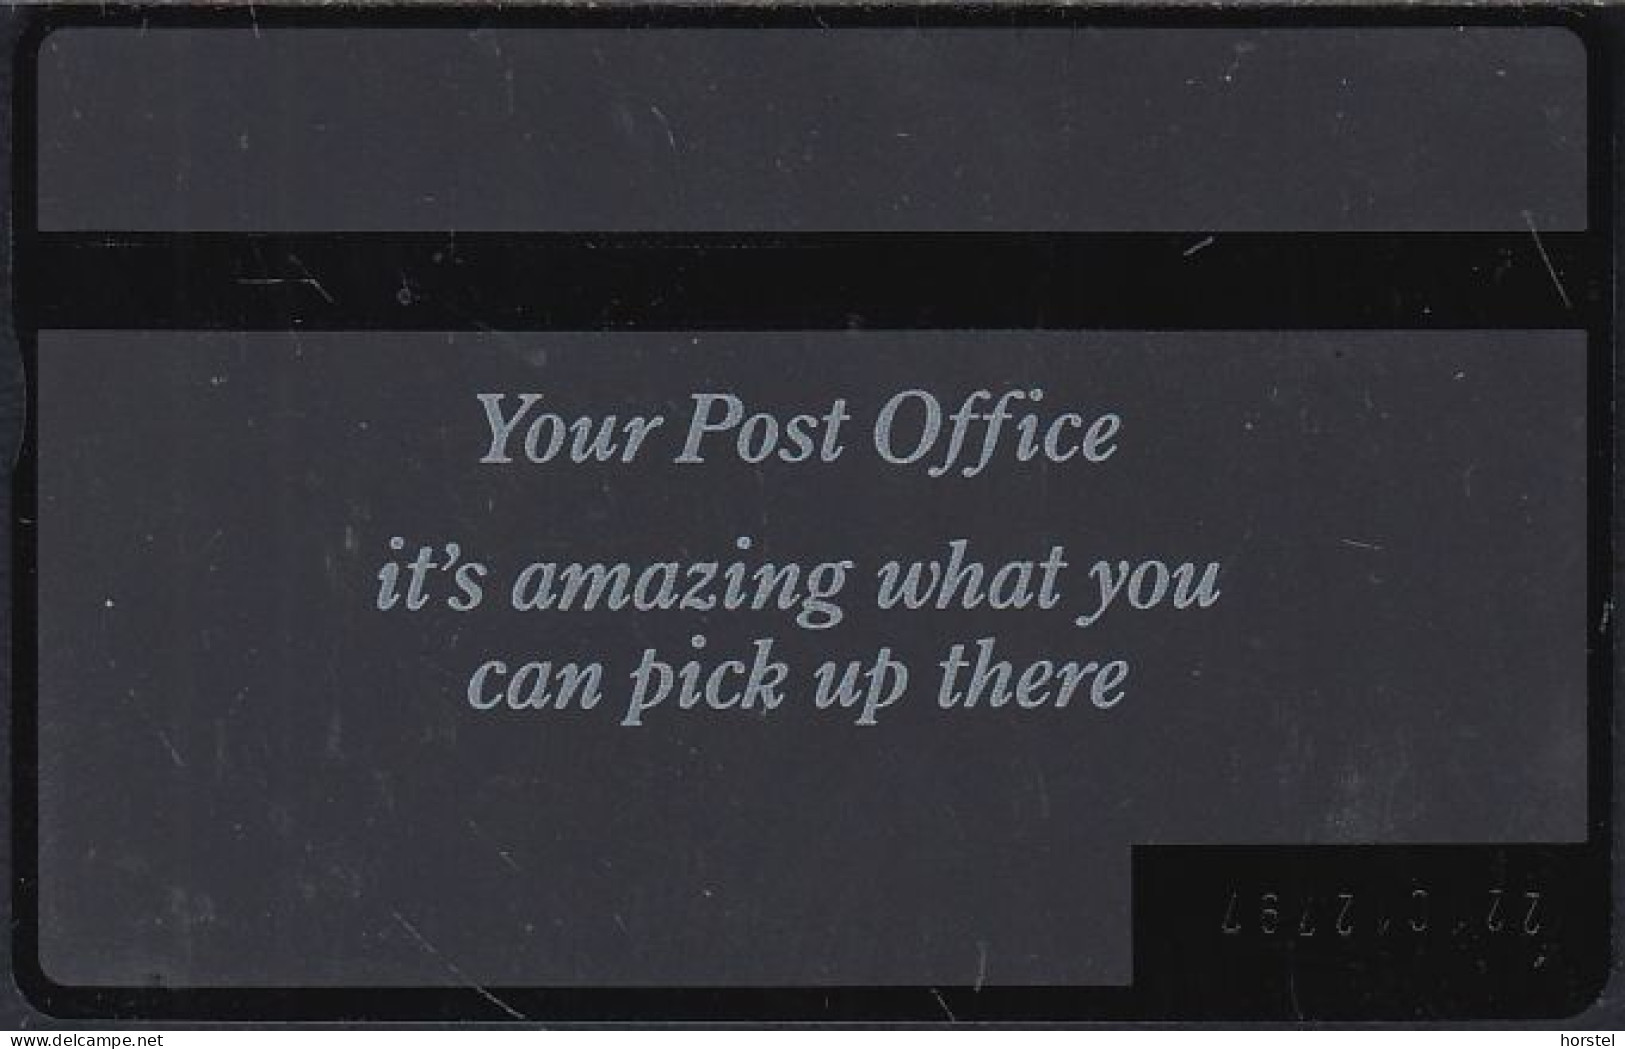 UK Bta 026 Post Office - 40 Units - 221C - BT Advertising Issues